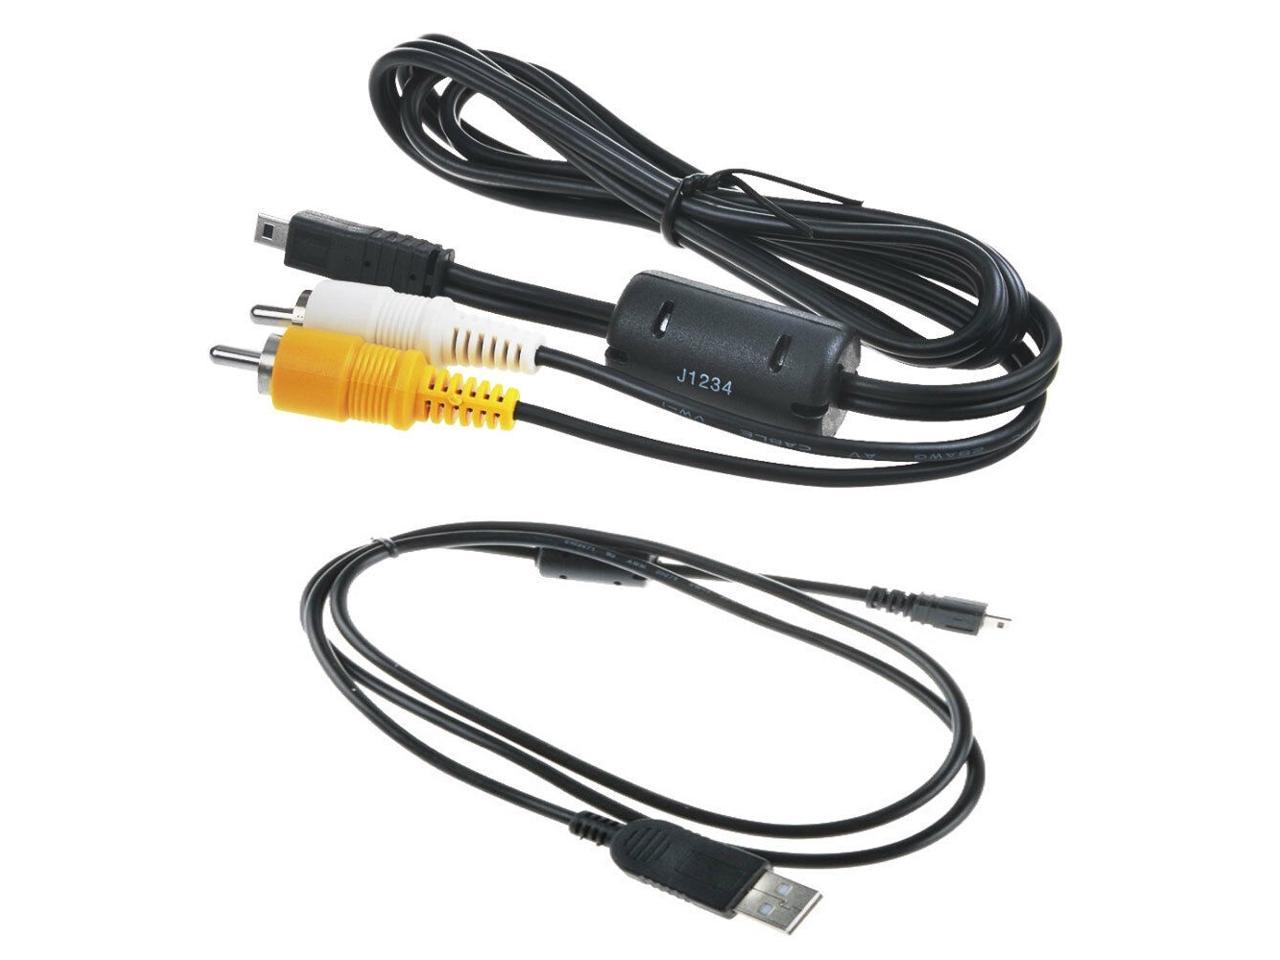 PANASONIC LUMIX DMC-GM5 CAMERA USB DATA SYNC//TRANSFER CABLE LEAD FOR PC MAC